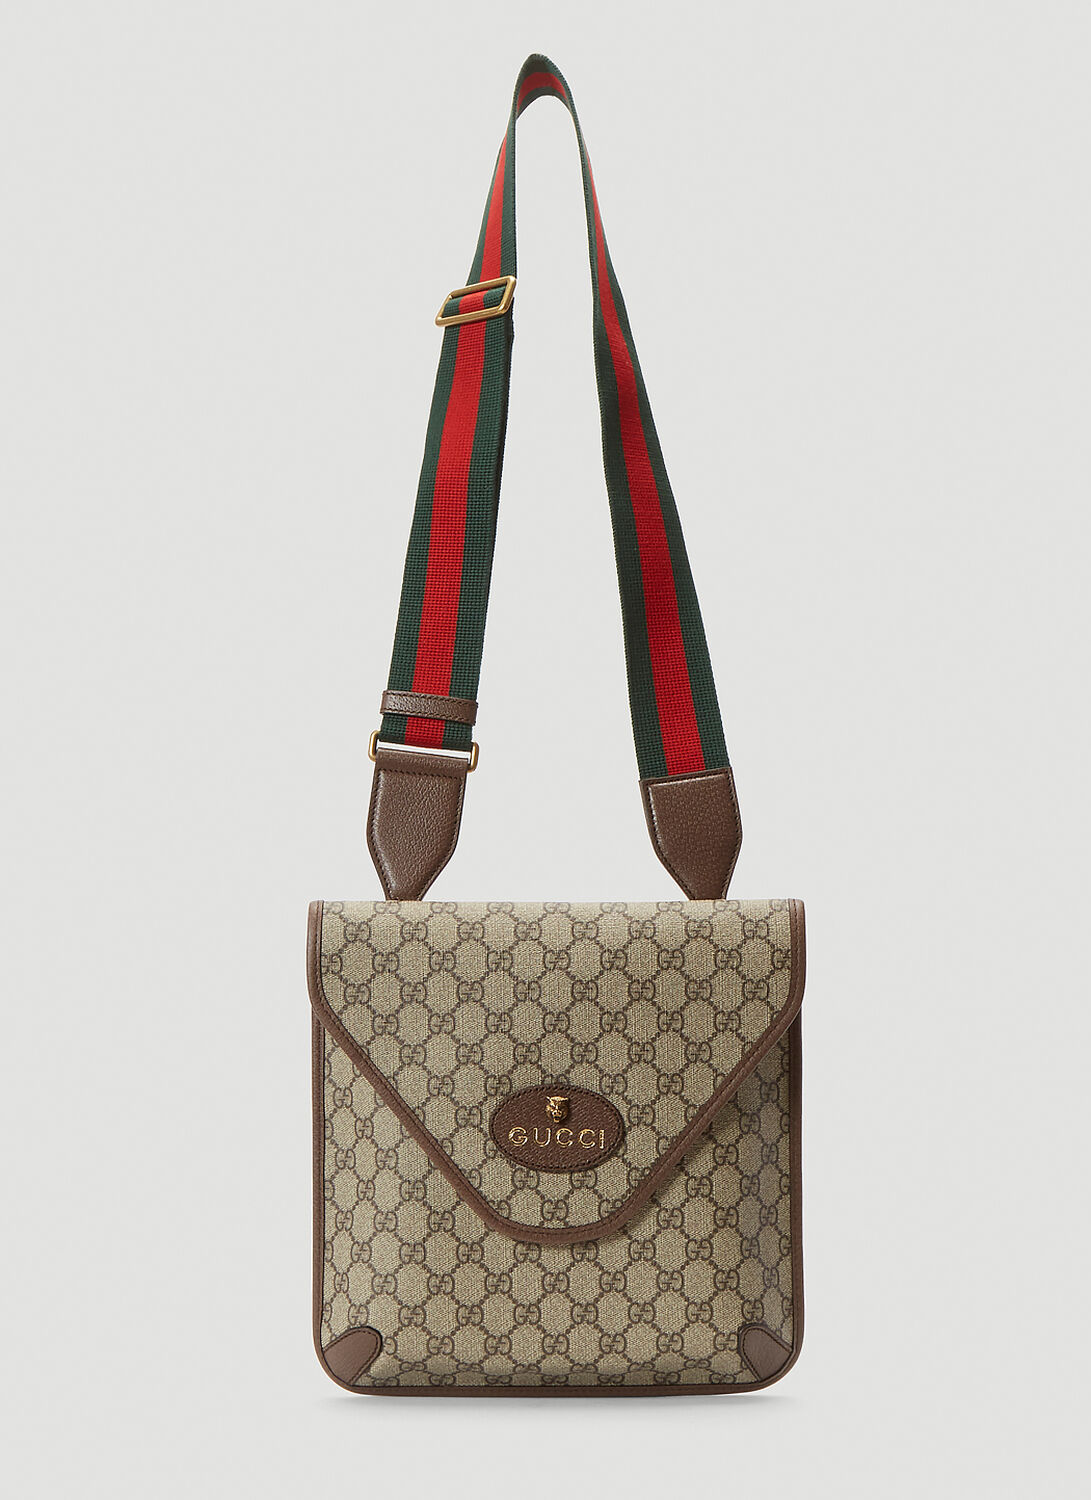 Neo Vintage GG medium messenger bag, Gucci